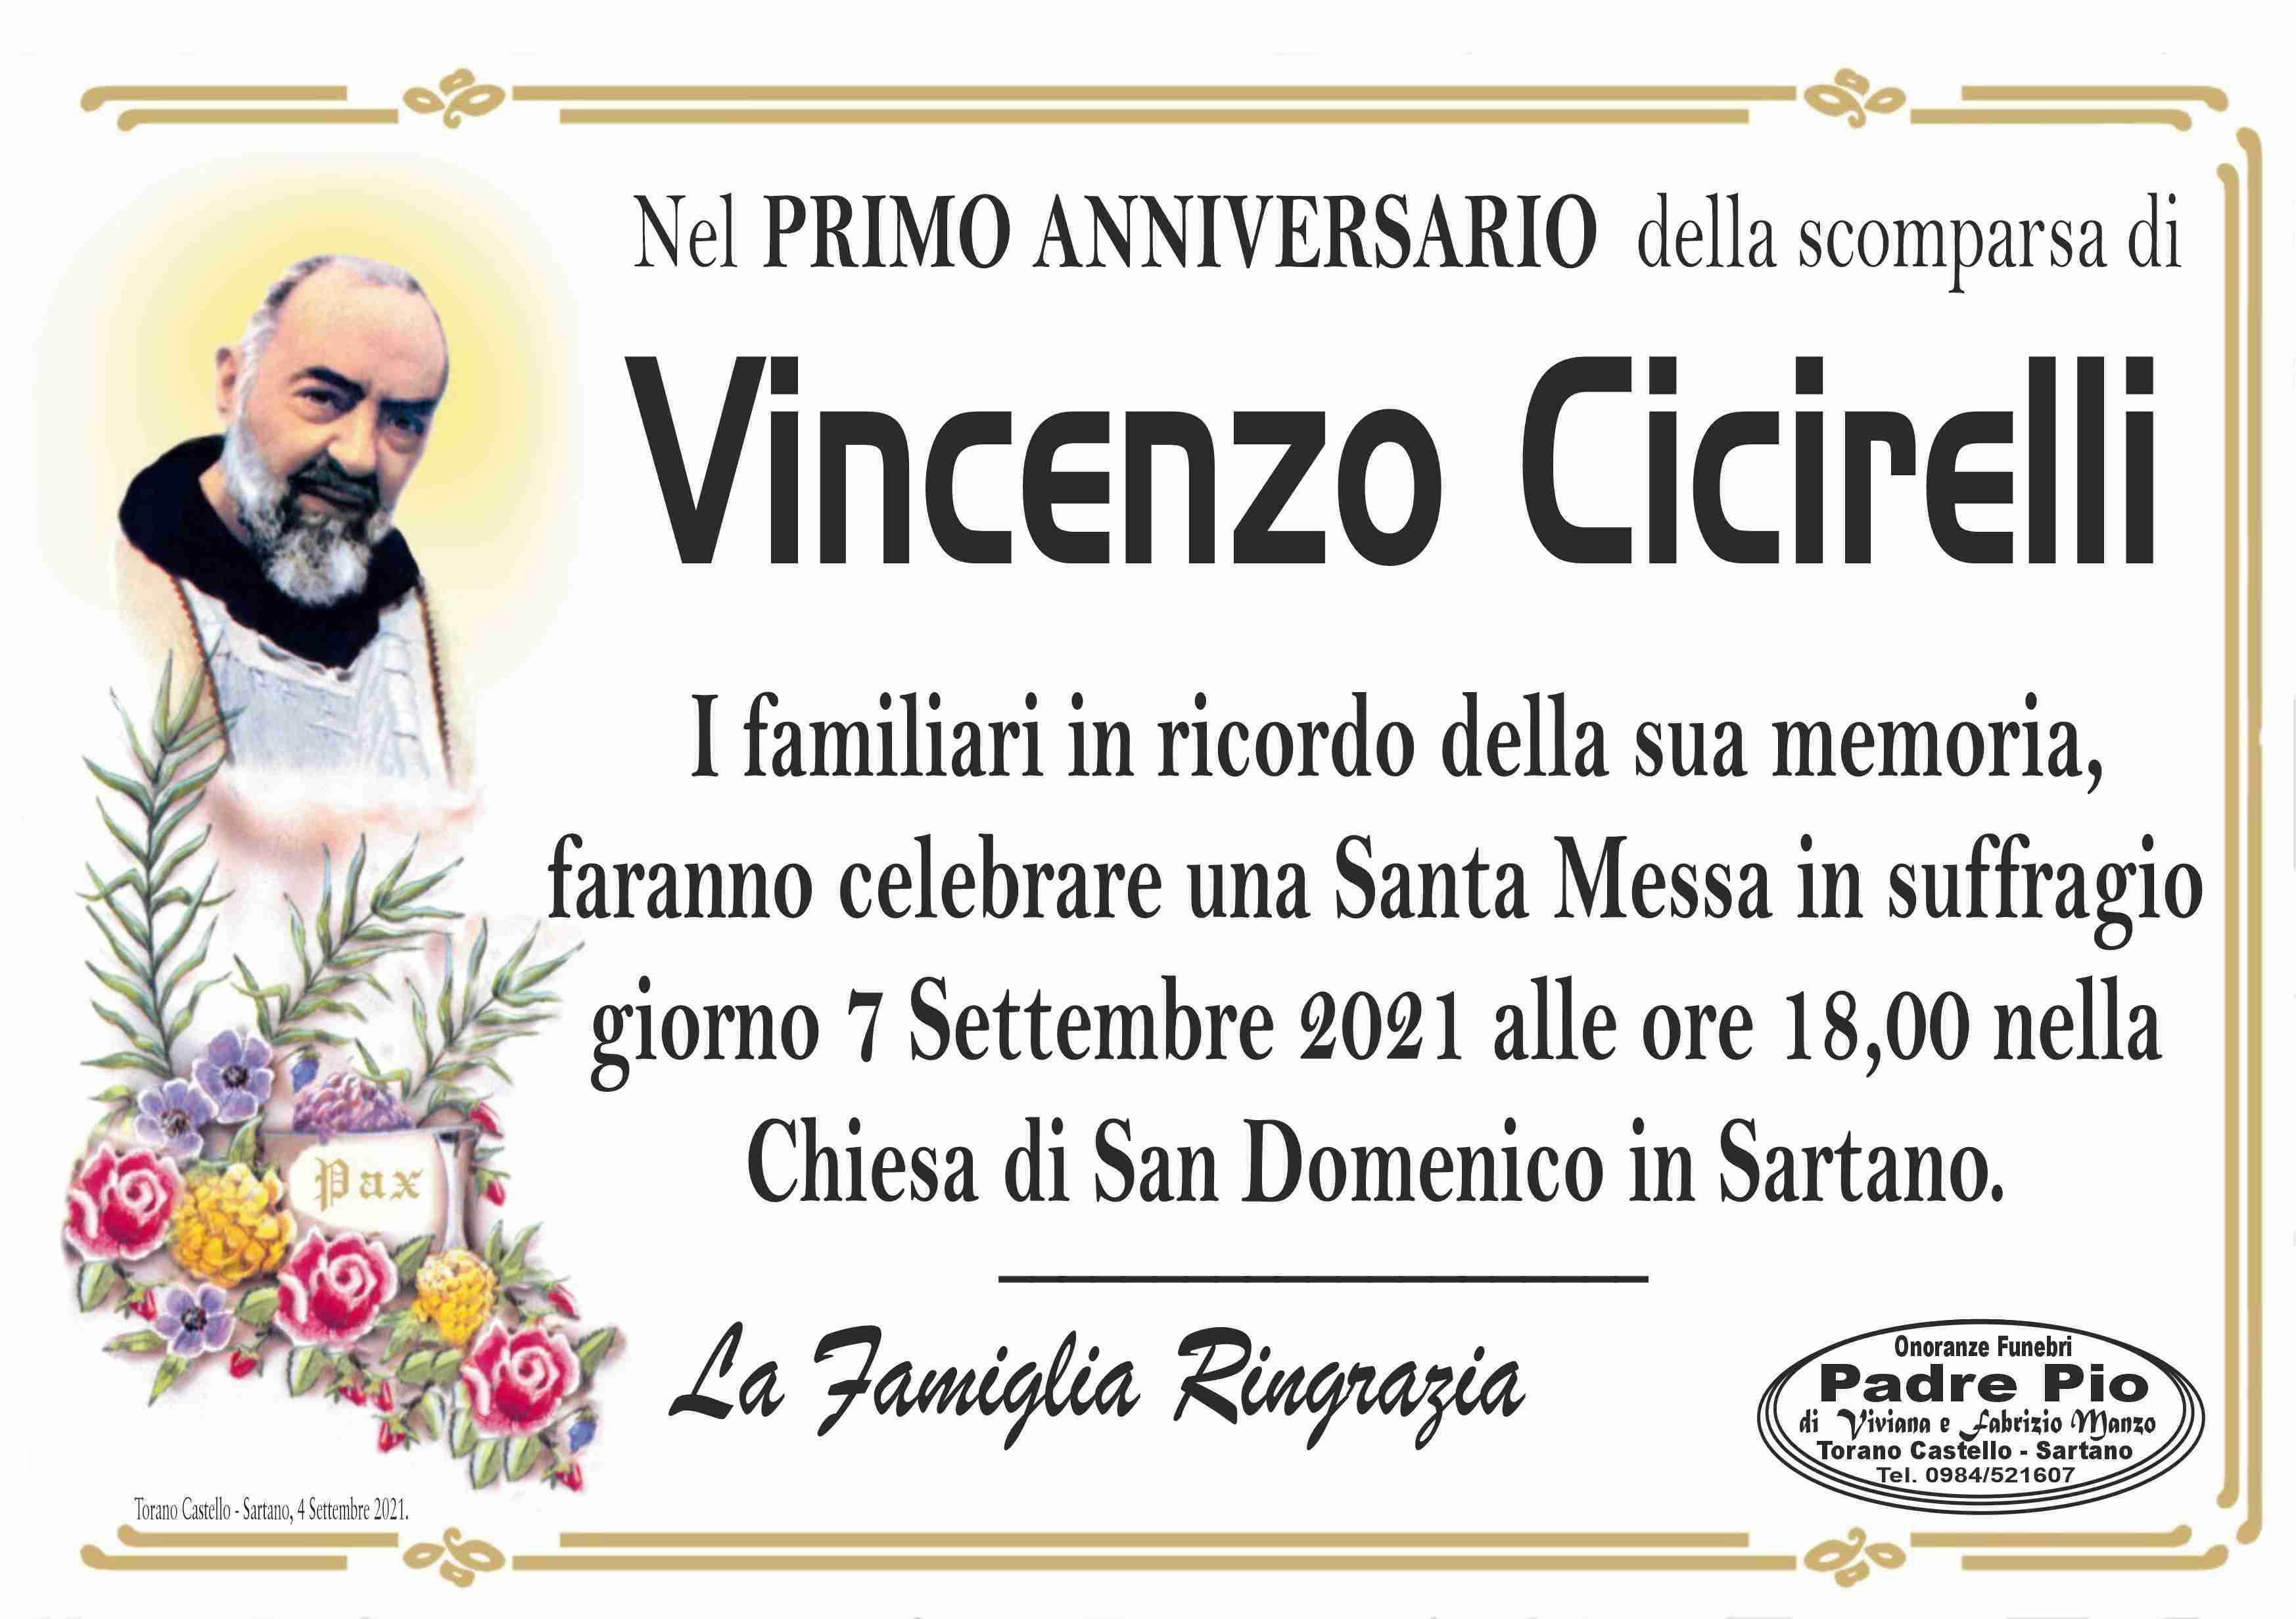 Vincenzo Cicirelli